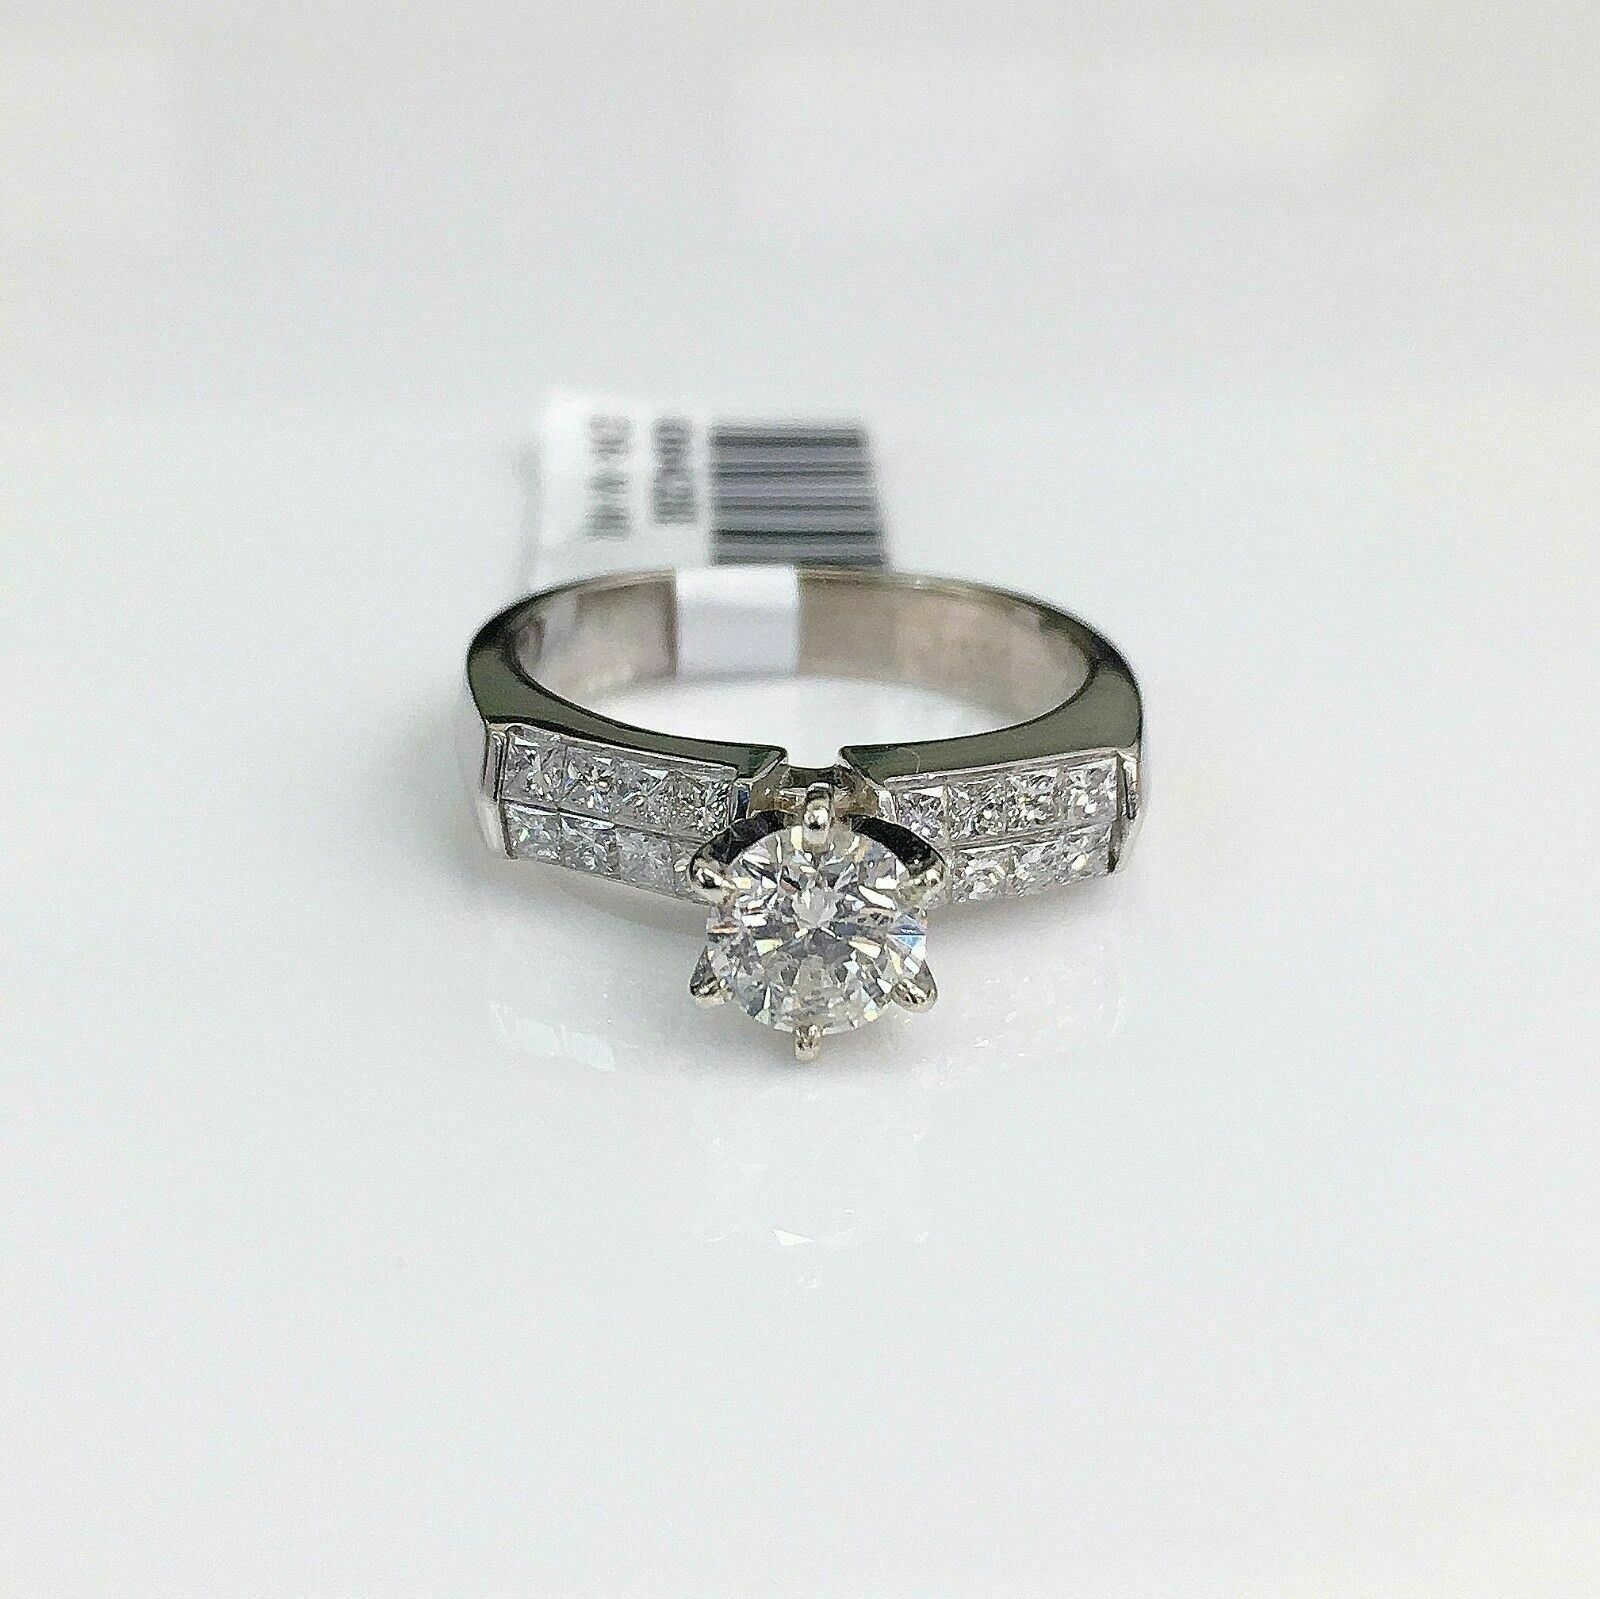 1.31 Carats t.w. Diamond Wedding/Engagement Ring 0.81 Carat Center Diamond 14K